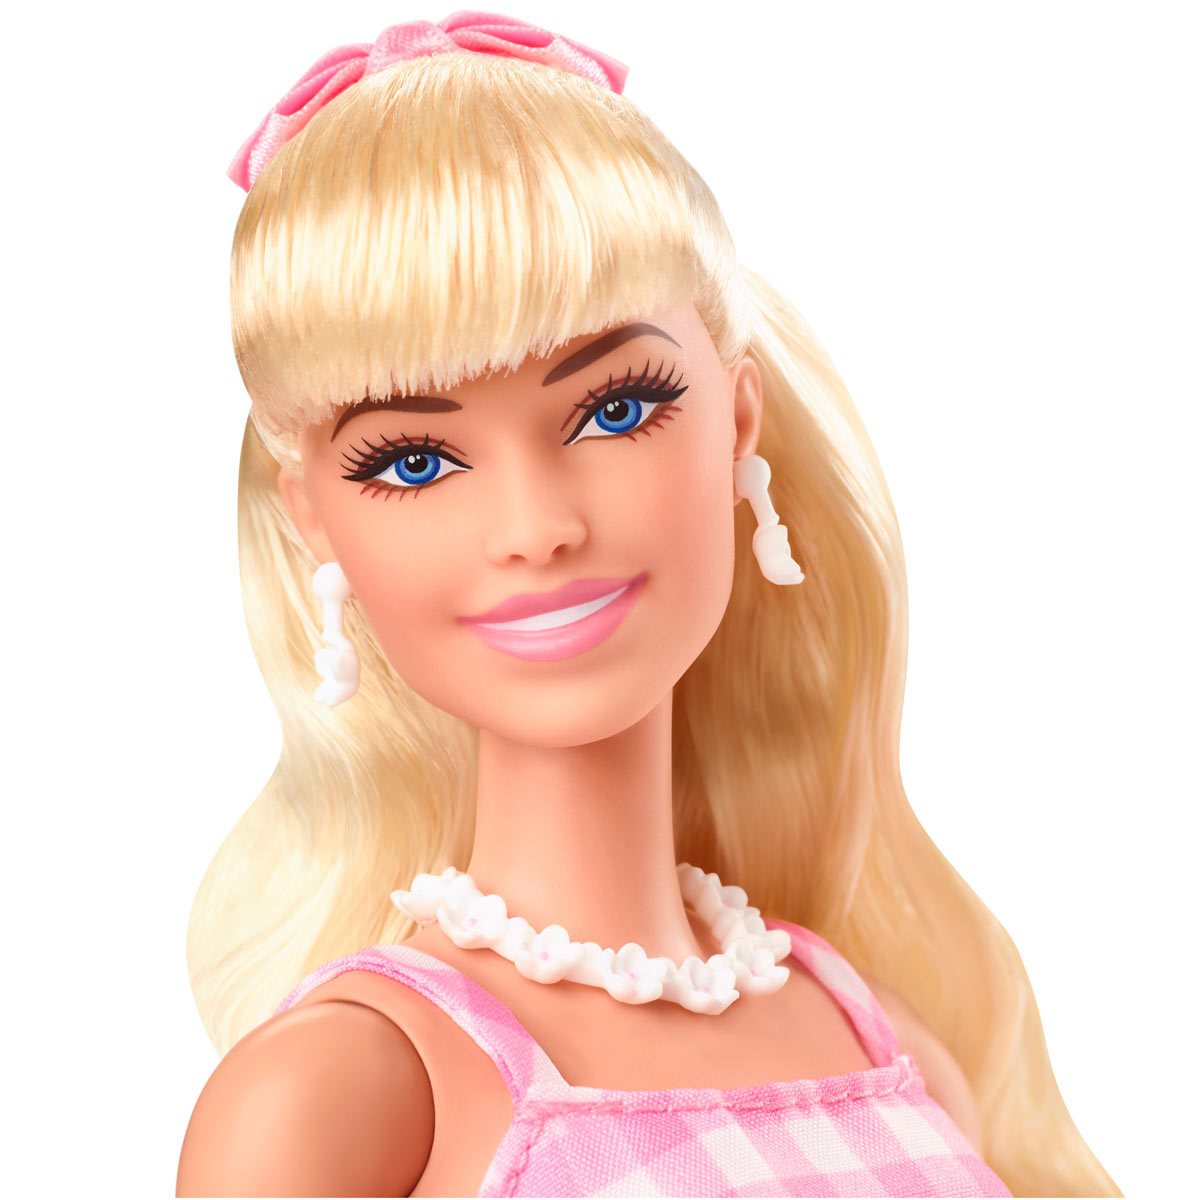 Barbie Doll's Instagram, Twitter & Facebook on IDCrawl